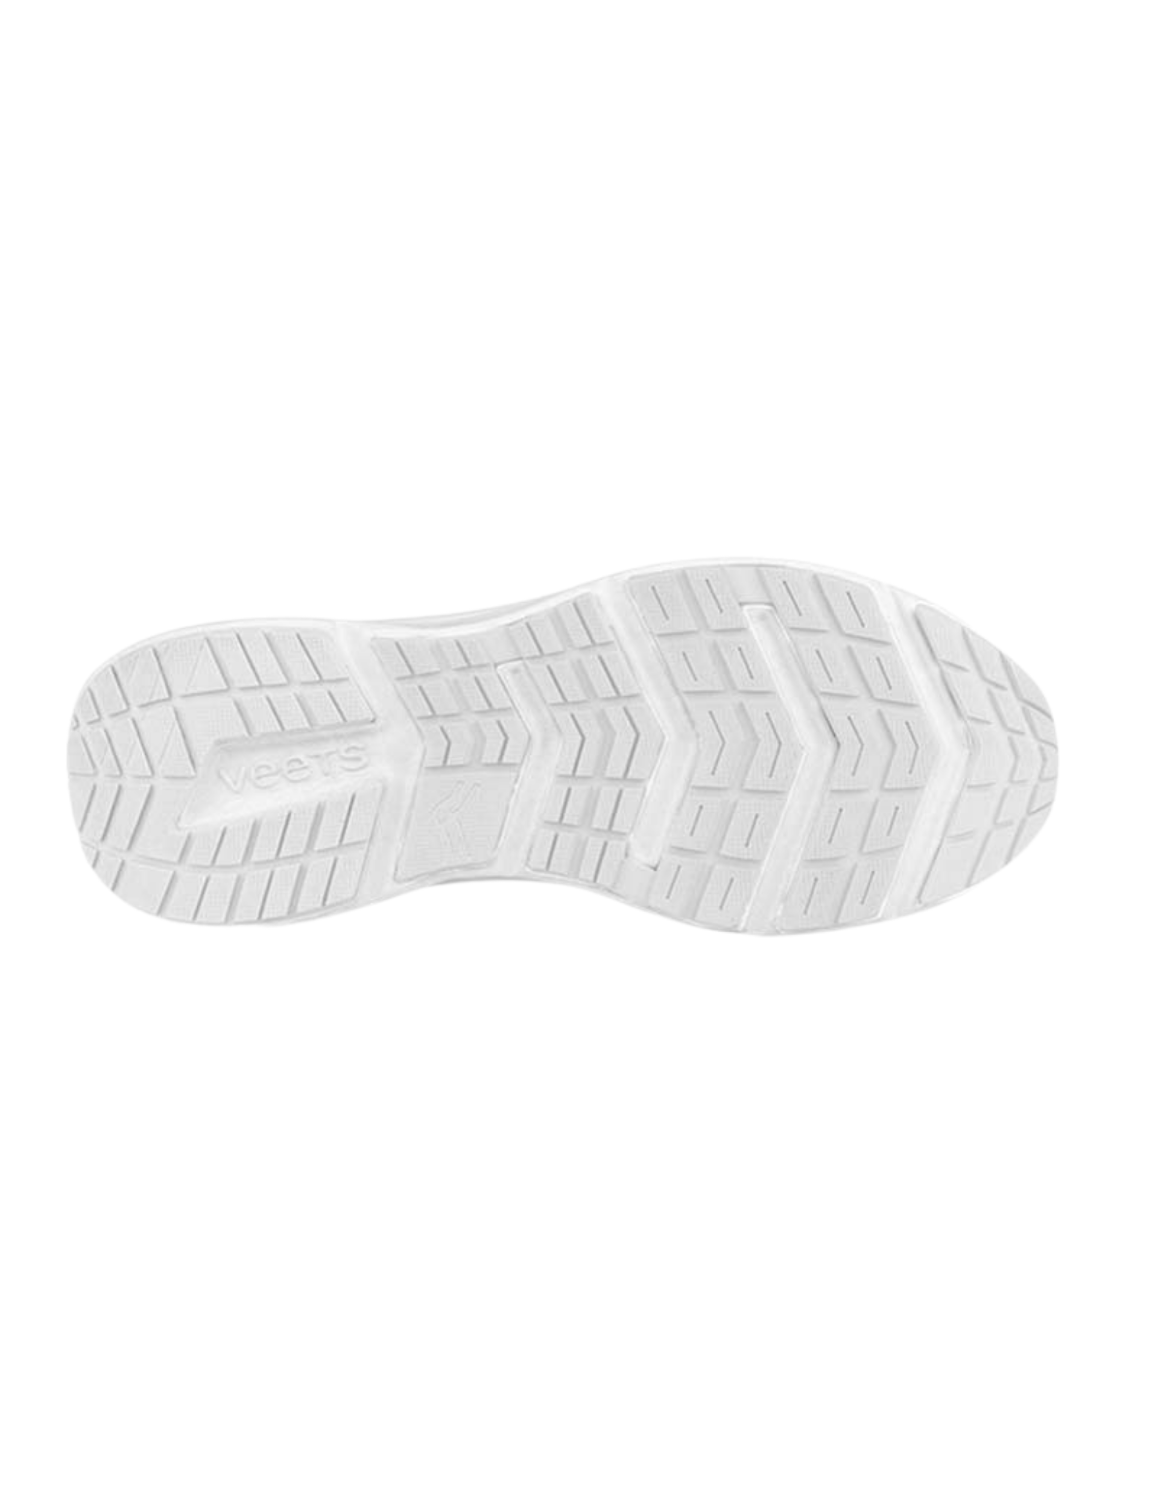 Chaussures de Running Veets Transition Knit Mif 1 Unisexe Blanc, vue semelle